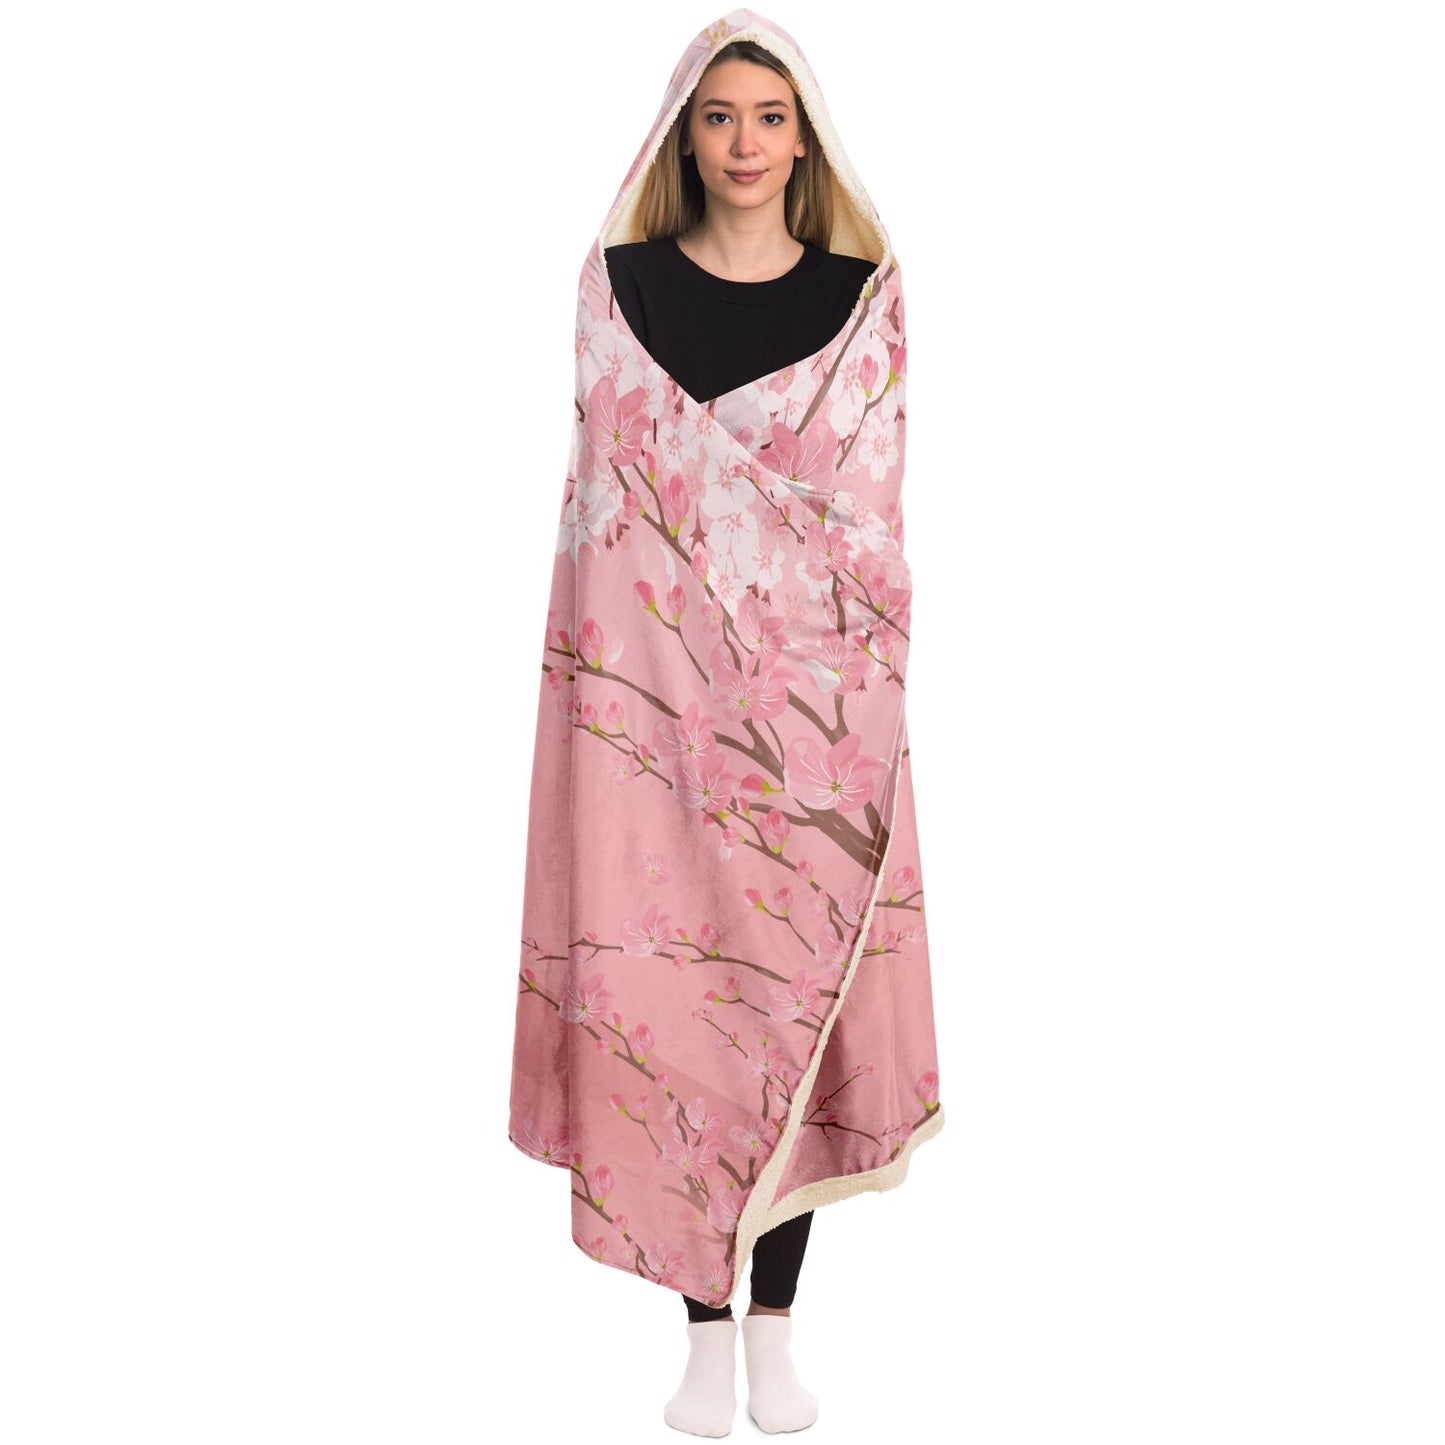 Kawaii Pink Mt Fuji Hooded Blanket, Cozy gamer lounge blanket, Japanese Cherry Blossom blanket with hood, Cute Anime Flannel Sherpa blanket